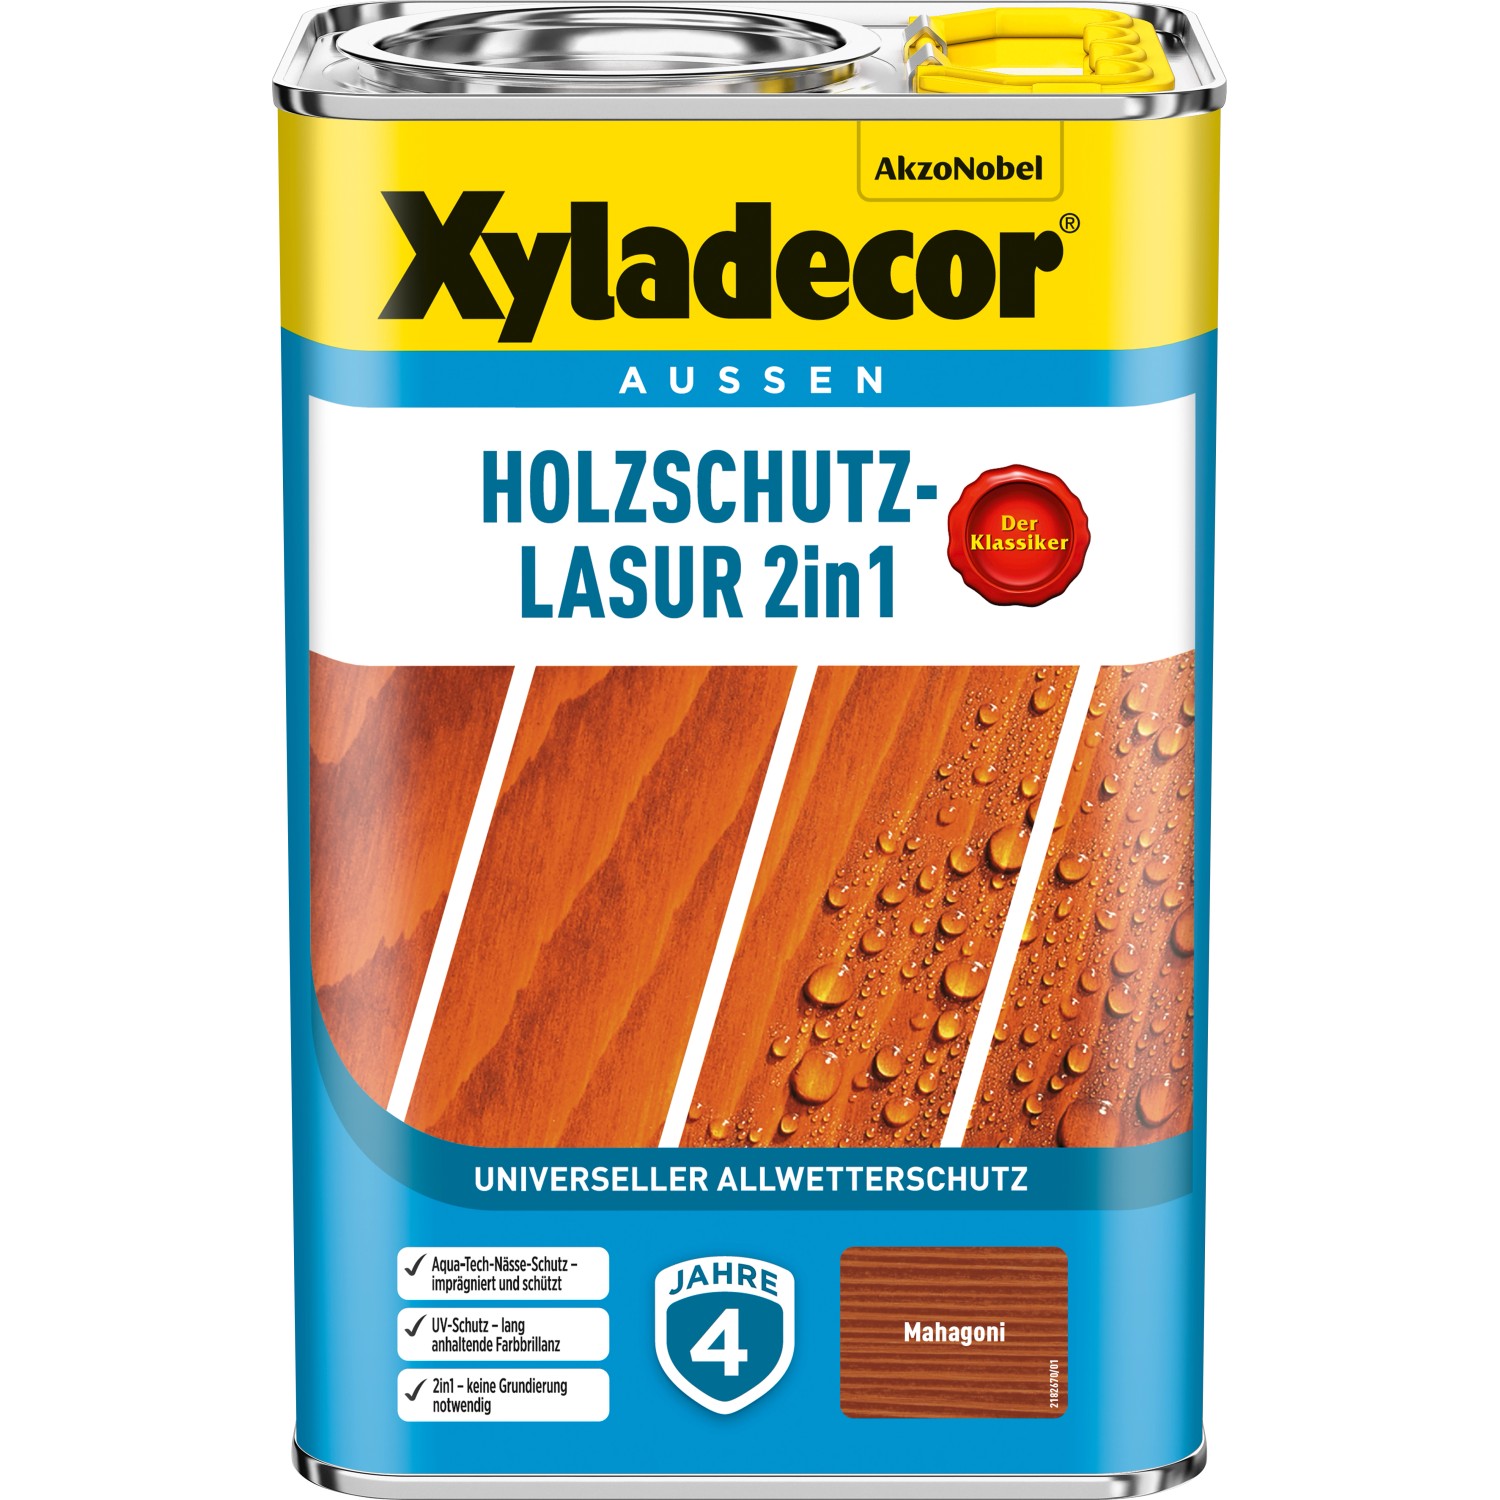 Xyladecor Holzschutz-Lasur 2in1 Mahagoni matt 4 l von Xyladecor